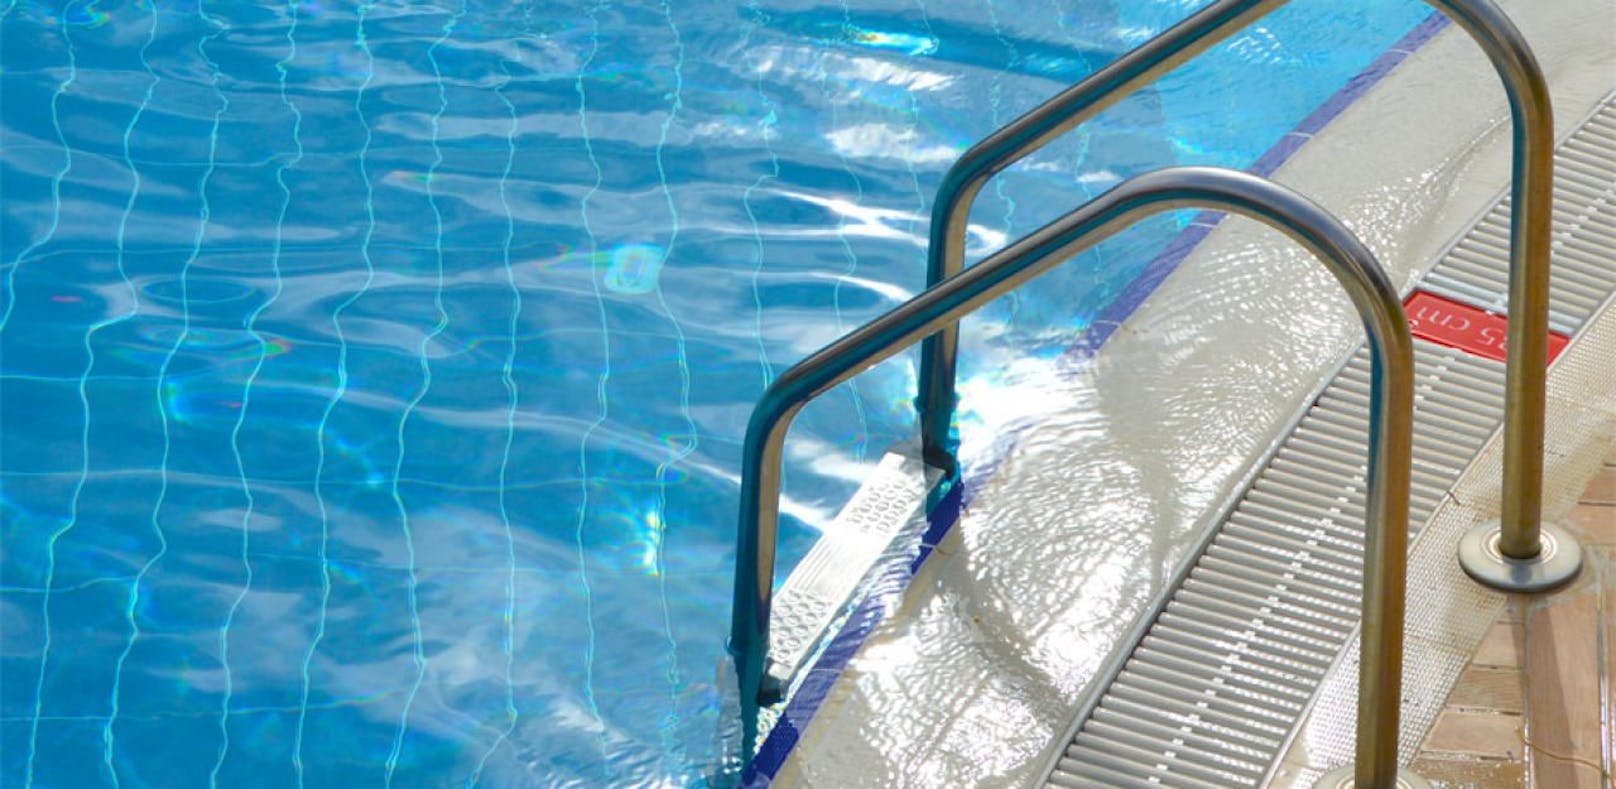 Der 51-Jährige trieb leblos im Pool